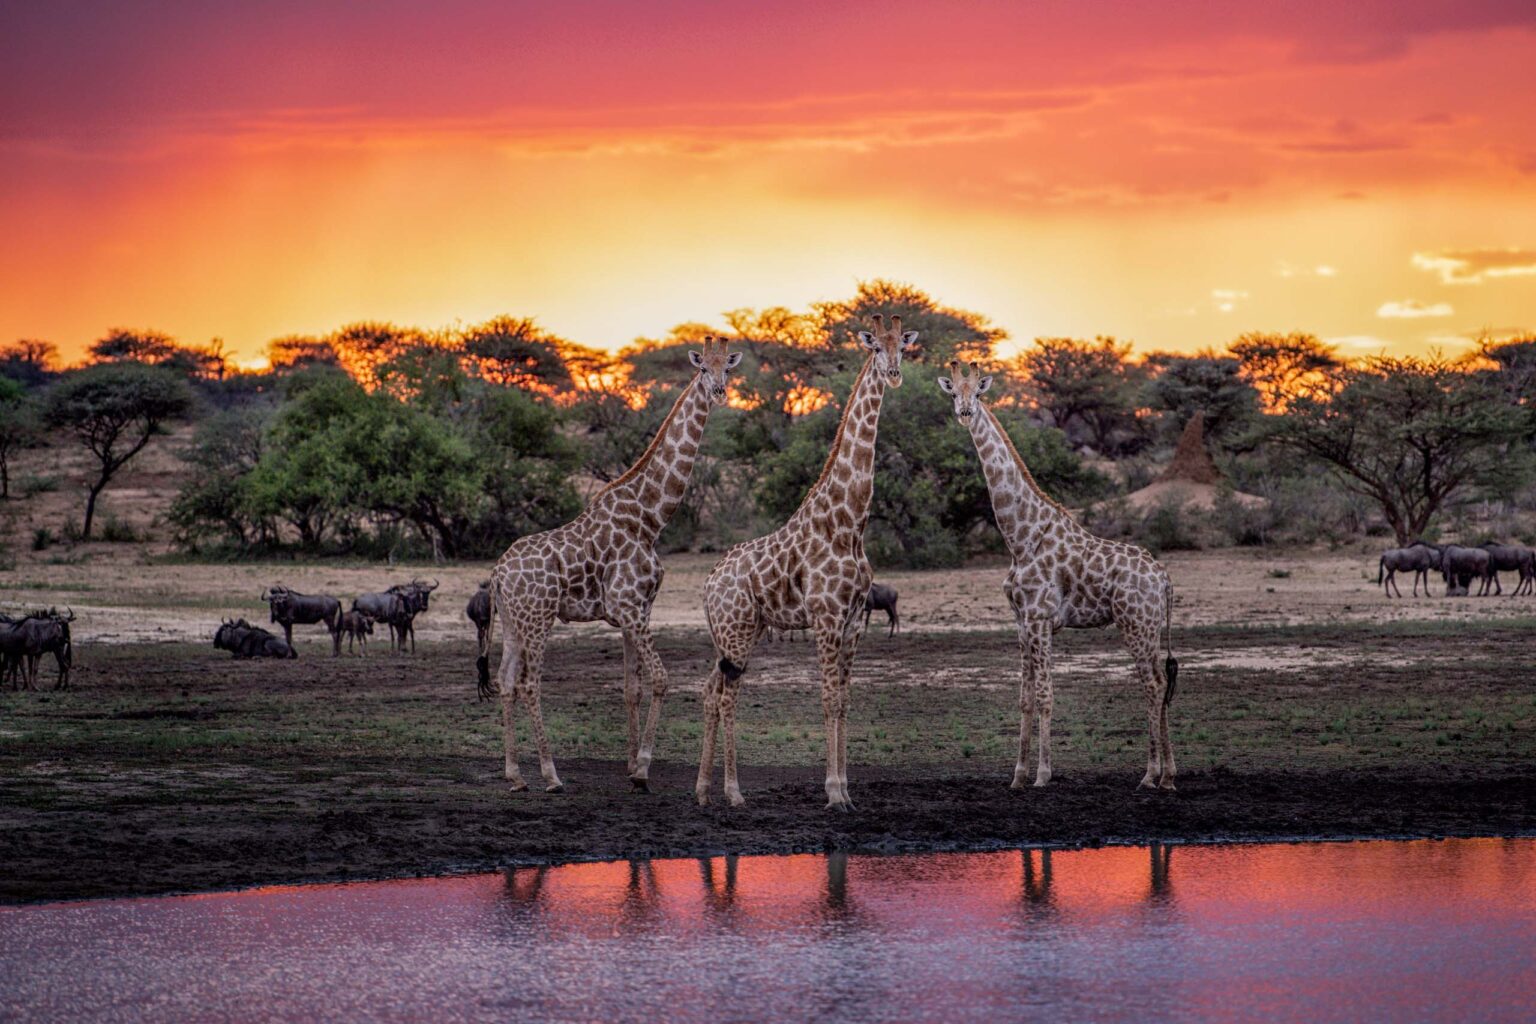 Giraffes in Namibia at sunset.